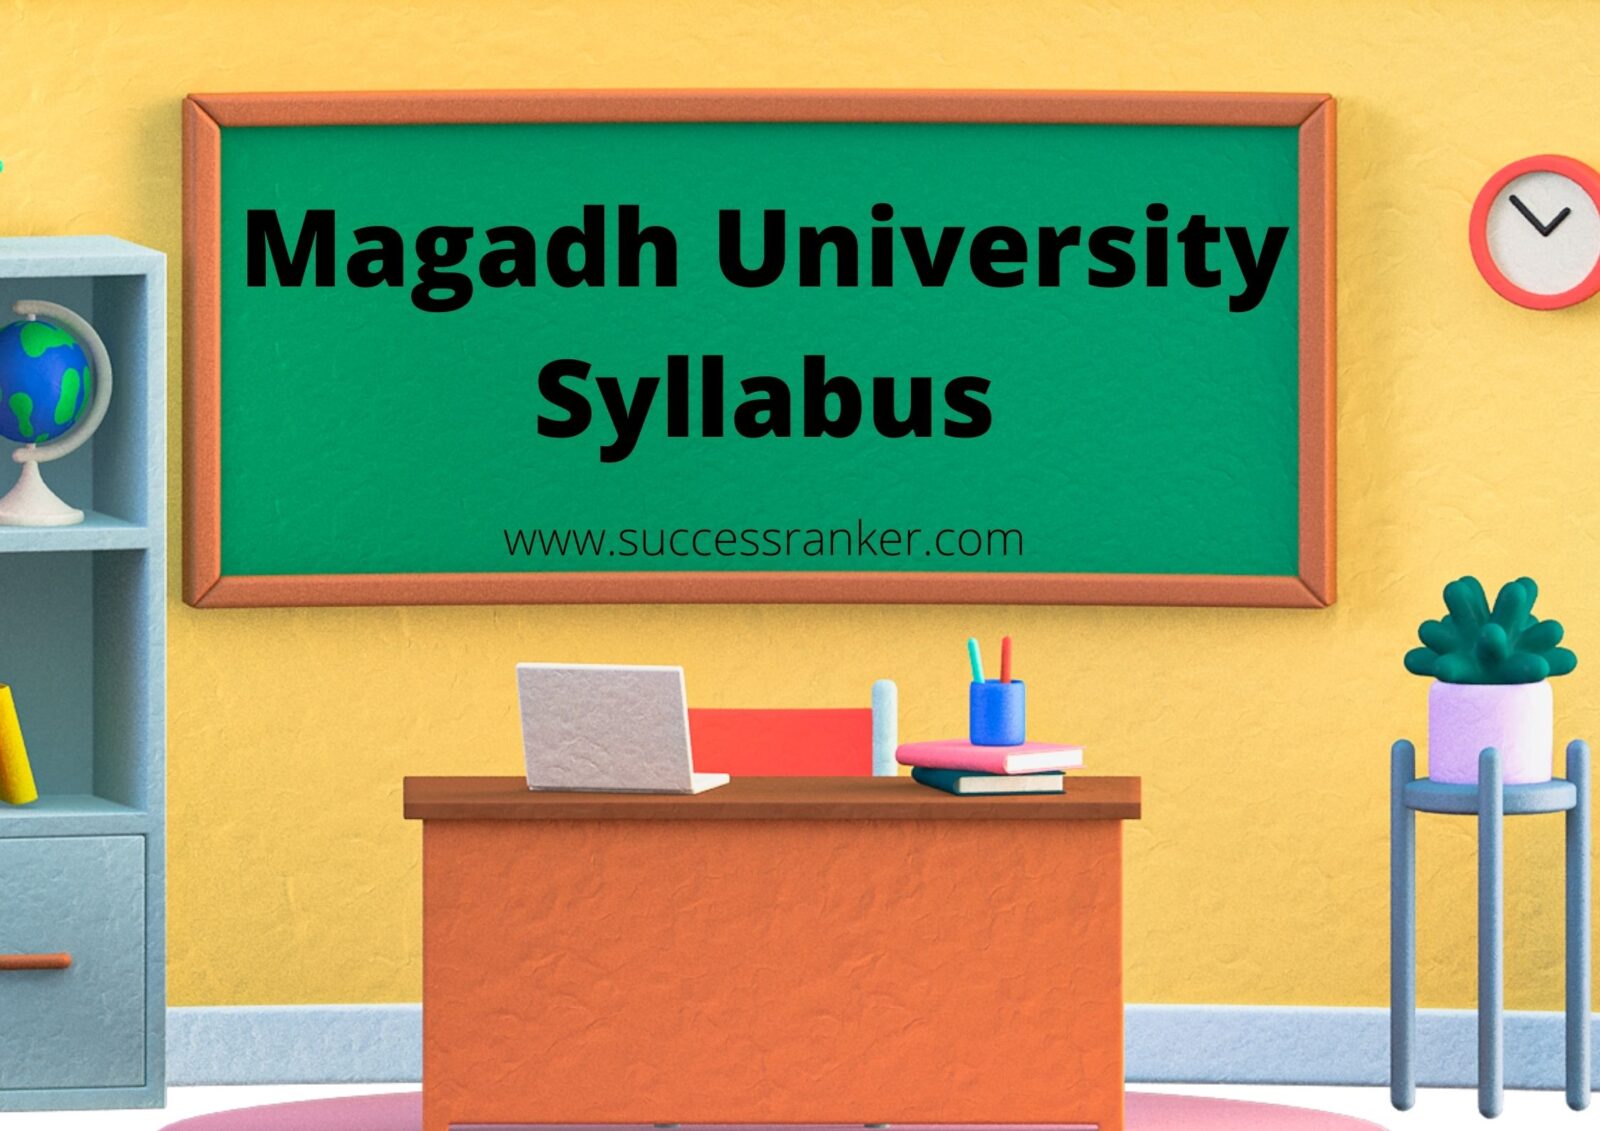 Magadh University Syllabus